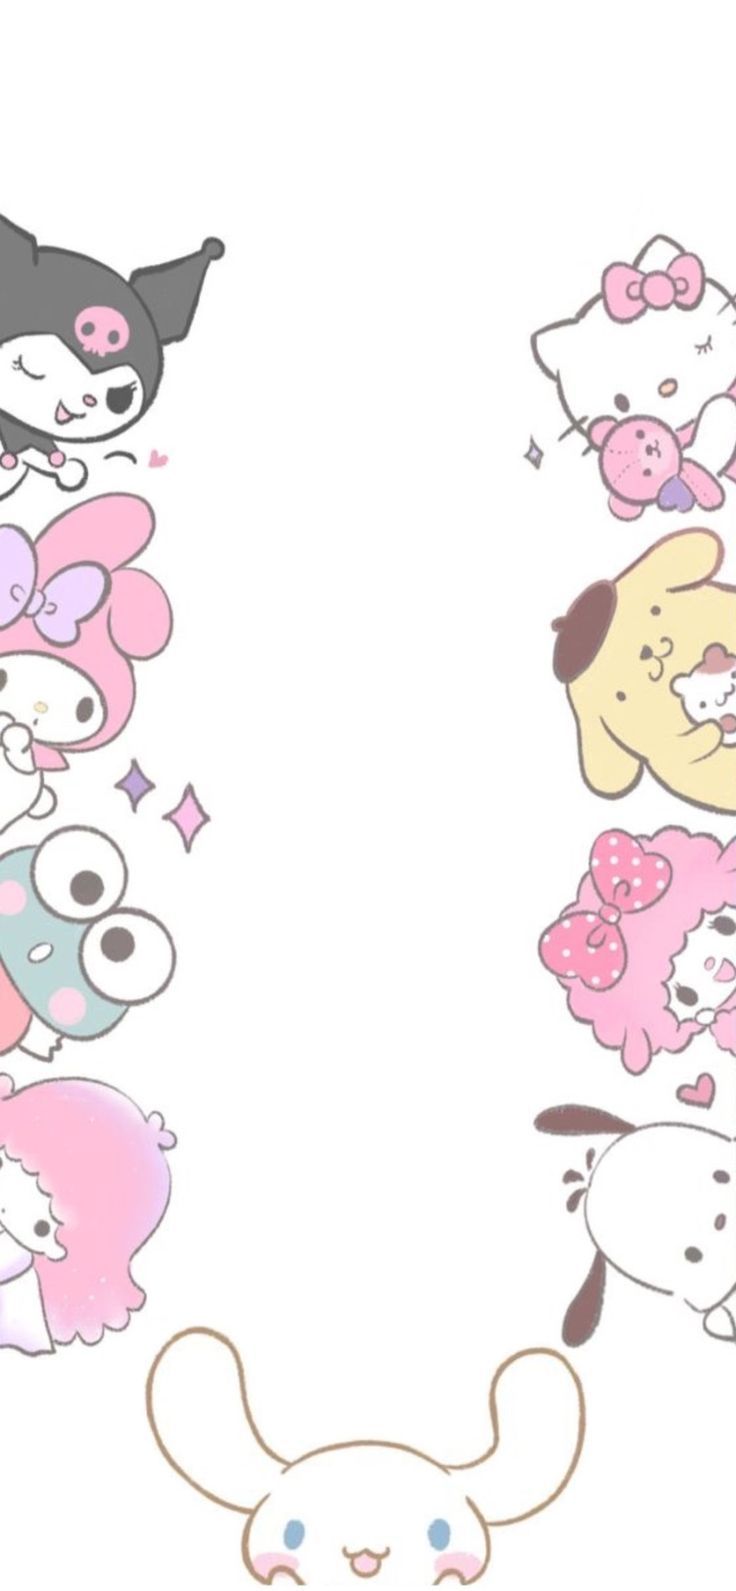 Sanrio Background Explore more Beginning, Characters., Hello Kitty, Japanese, Pleasan. Walpaper hello kitty, Hello kitty background, Hello kitty iphone wallpaper